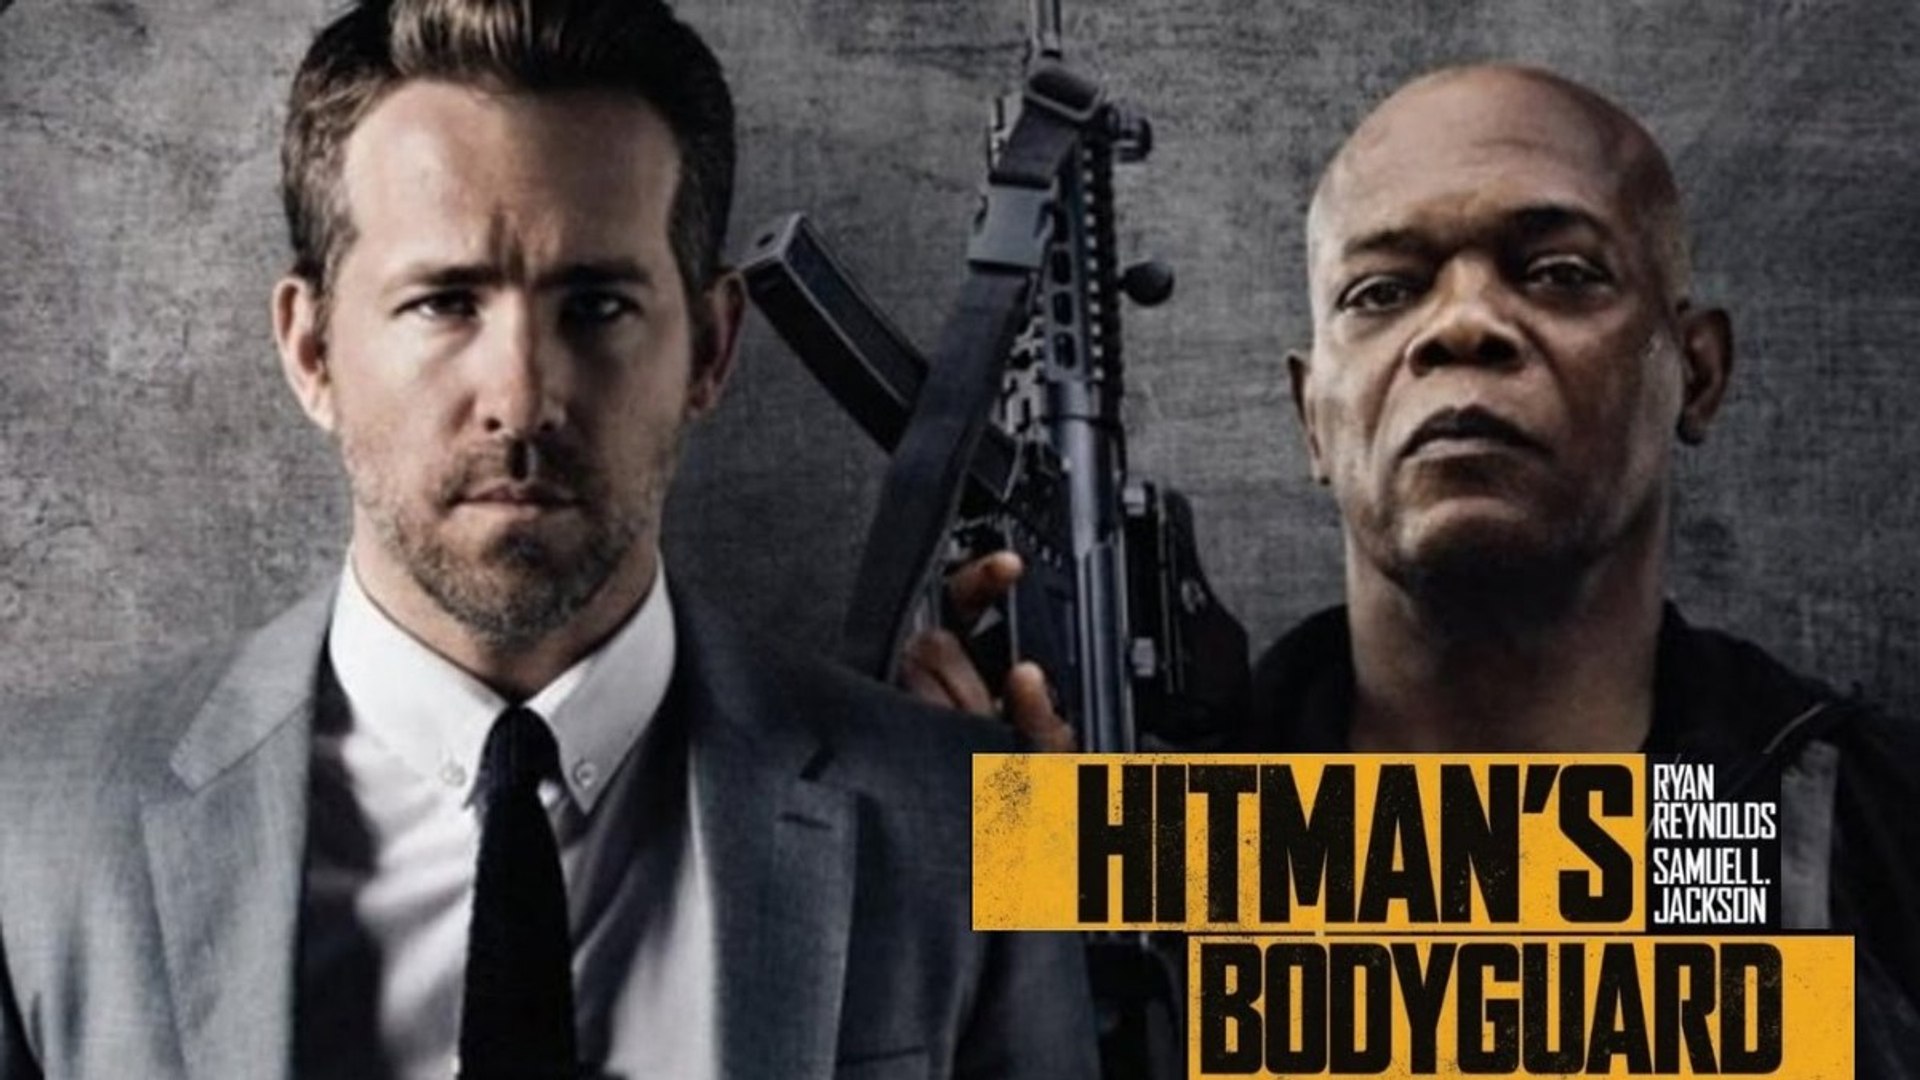 Hitman's Bodyguard Movie Blog Review